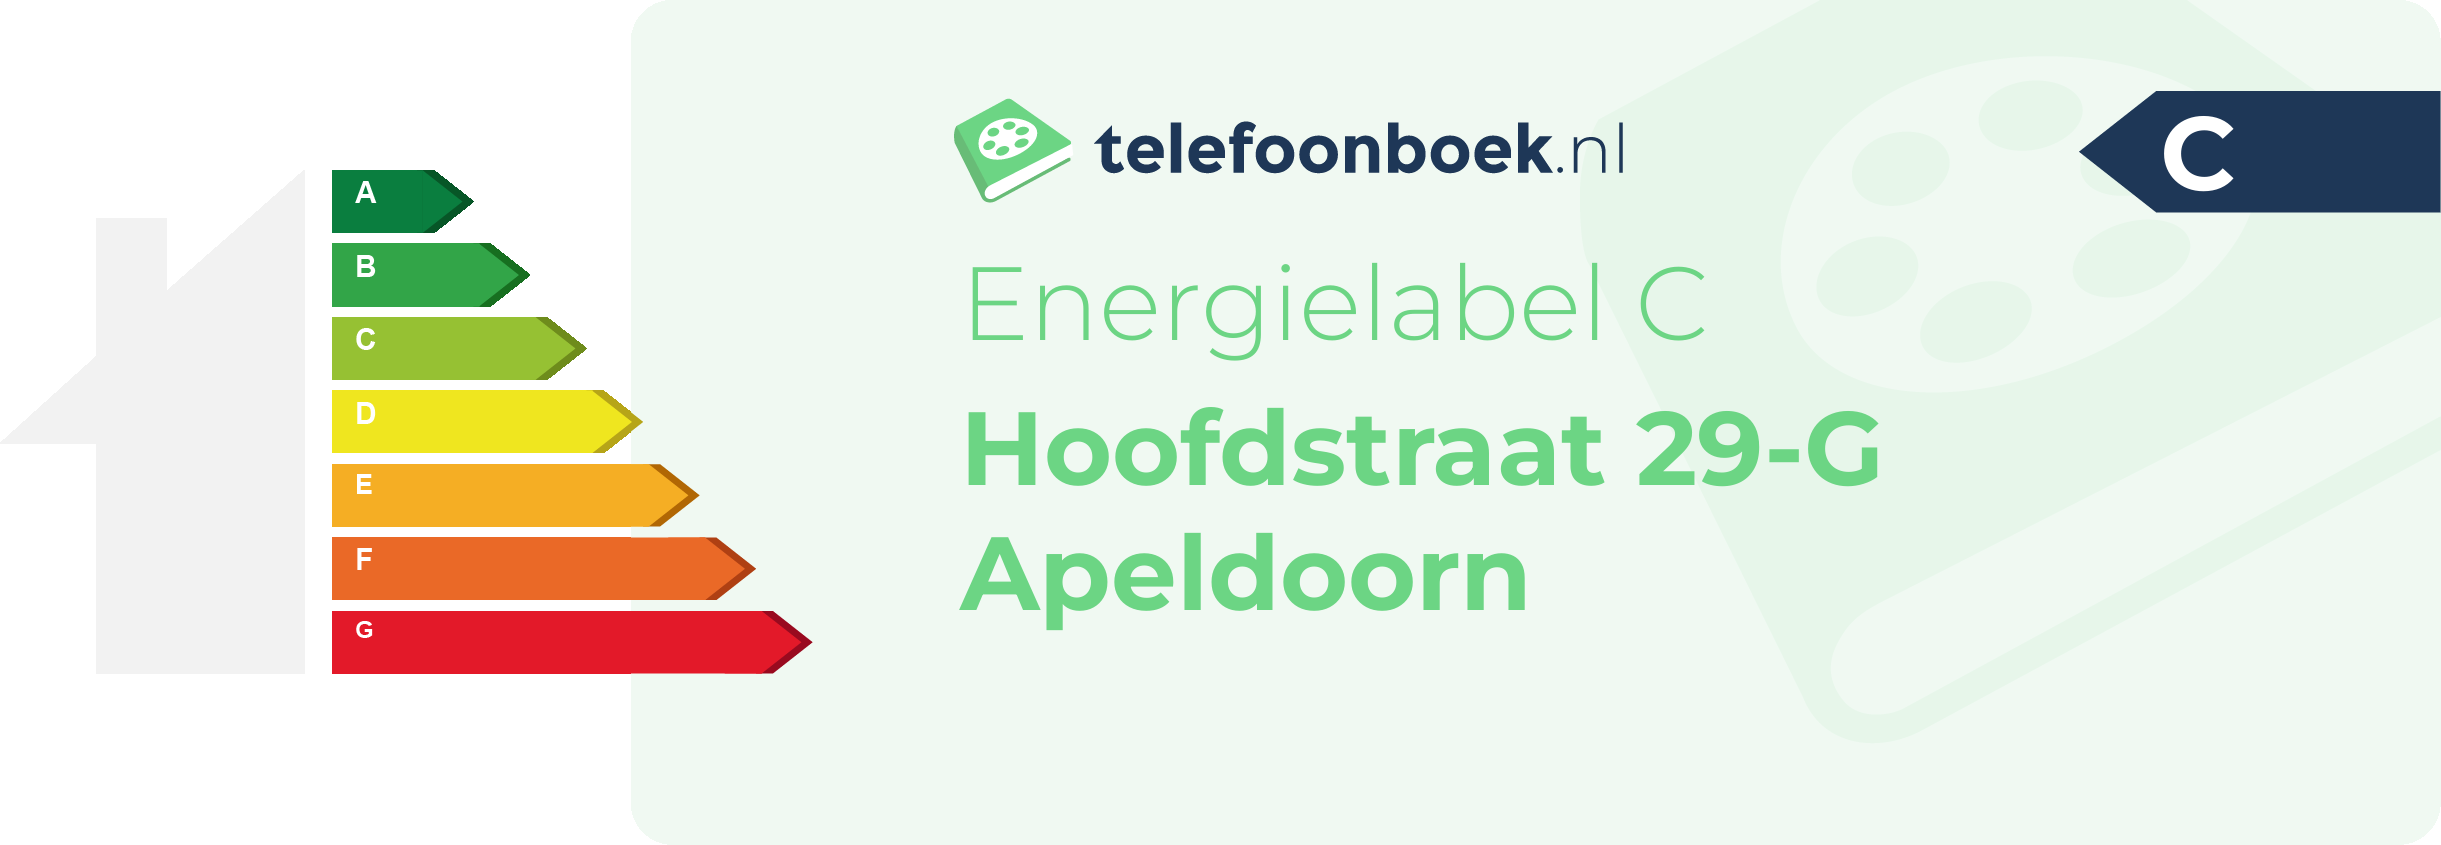 Energielabel Hoofdstraat 29-G Apeldoorn